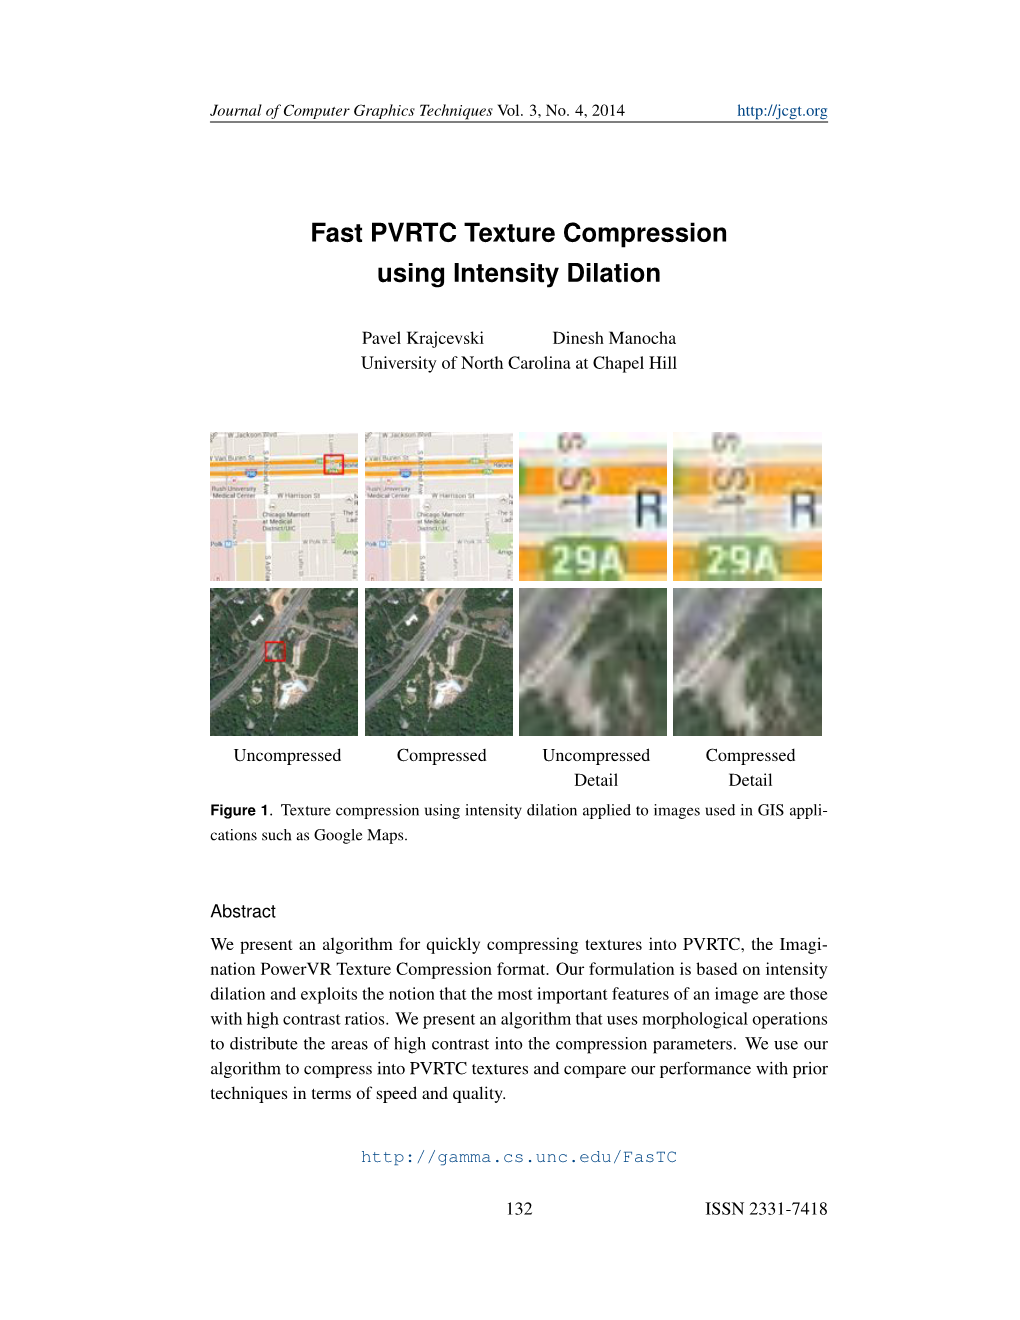 Fast PVRTC Texture Compression Using Intensity Dilation